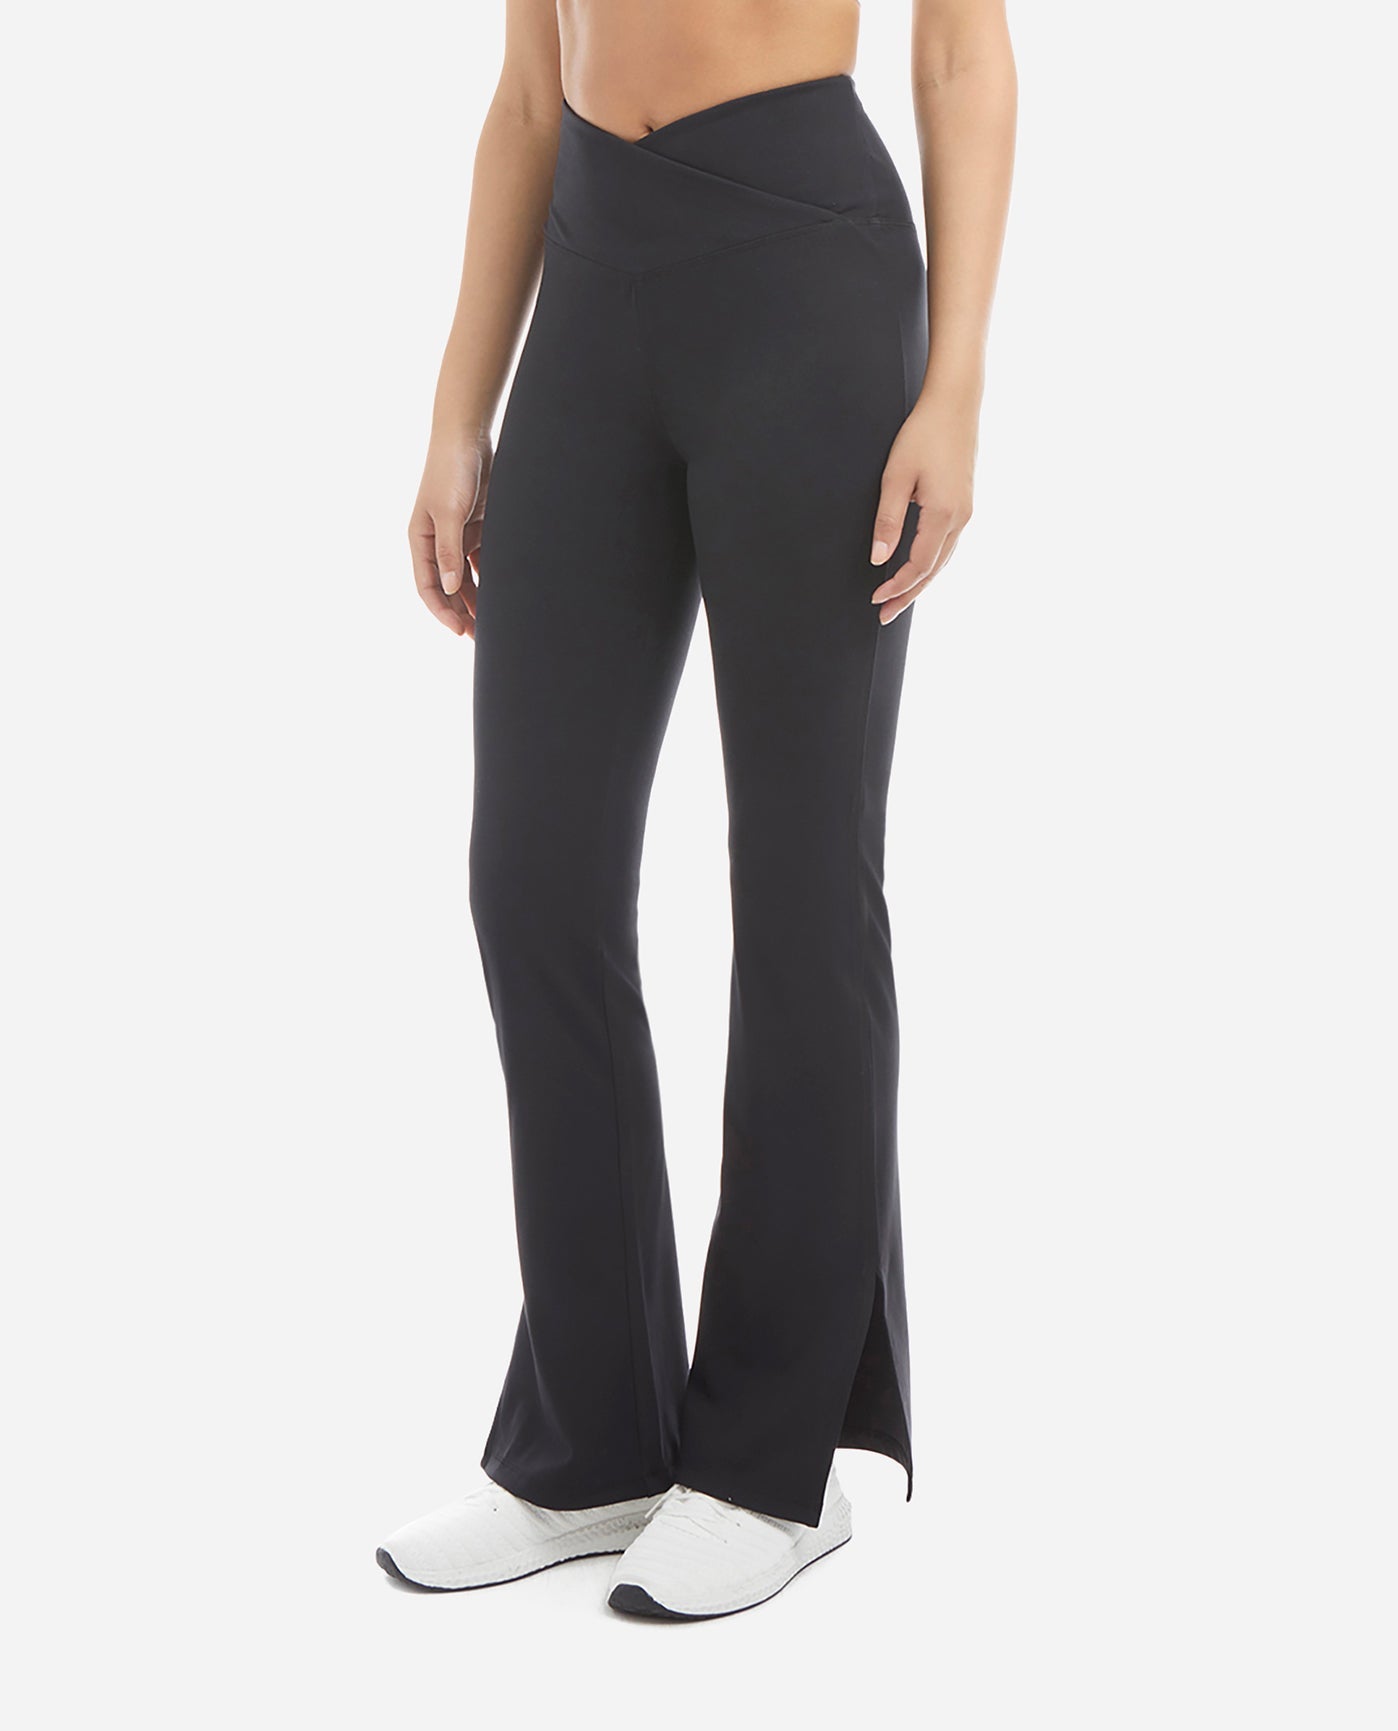 Black High-Waisted Side Slit Flare Pants with Pockets – SKNZ